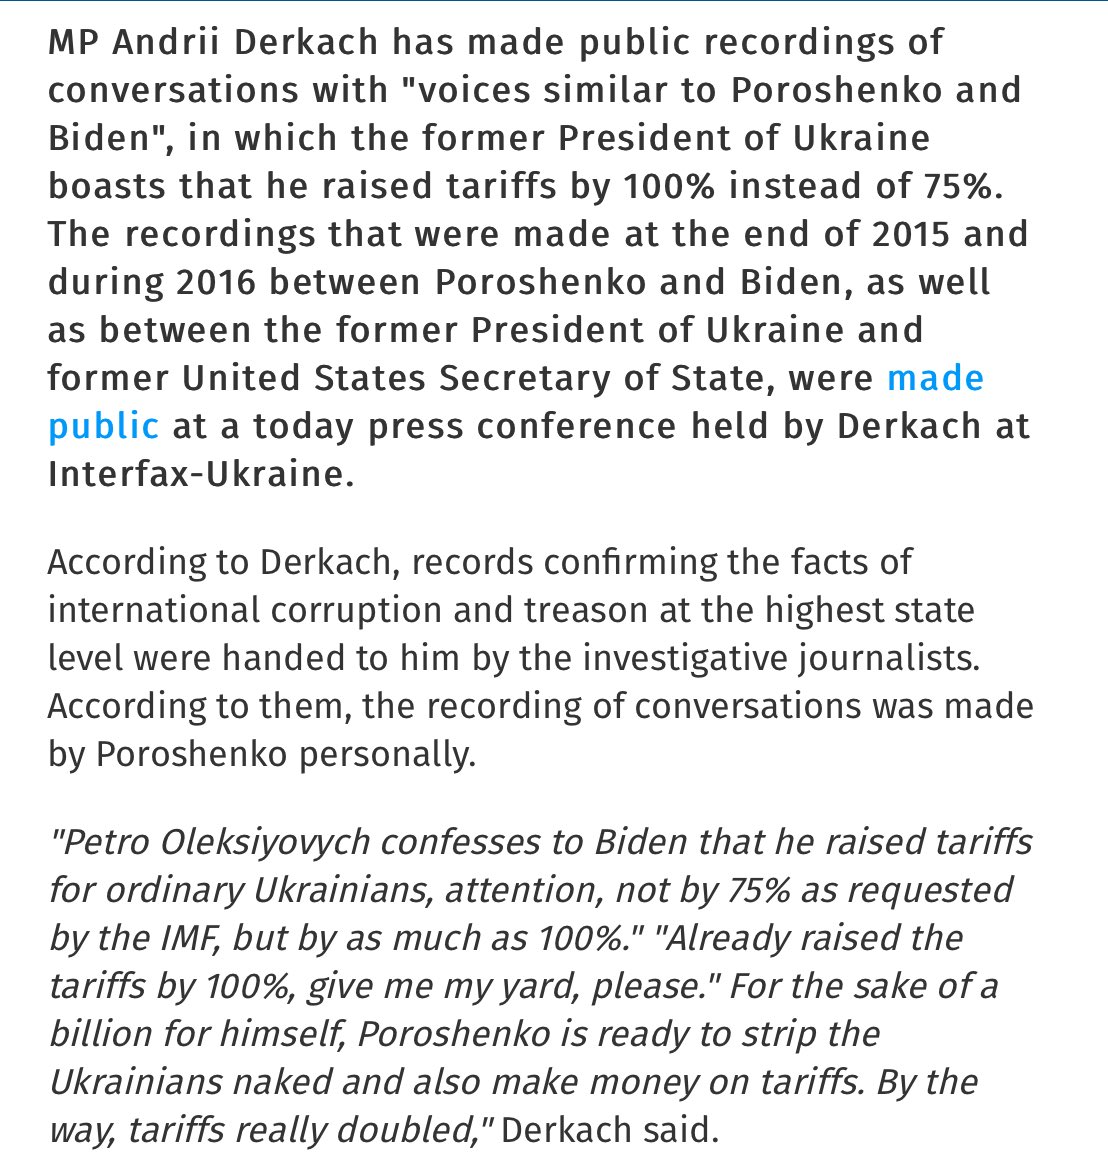 MP Andril Derkach Makes Conversations Between Petro Poroshenko, Joe Biden & Hillary Clinton PublicPresents Statement on Being Handed Records on International Corruption & Treason at Highest Levels @POTUS  https://ukranews.com/en/news/703227-poroshenko-boasted-to-biden-that-he-had-raised-tariffs-by-100-instead-of-the-required-75-a-record  https://twitter.com/dmills3710/status/1222713369091805184